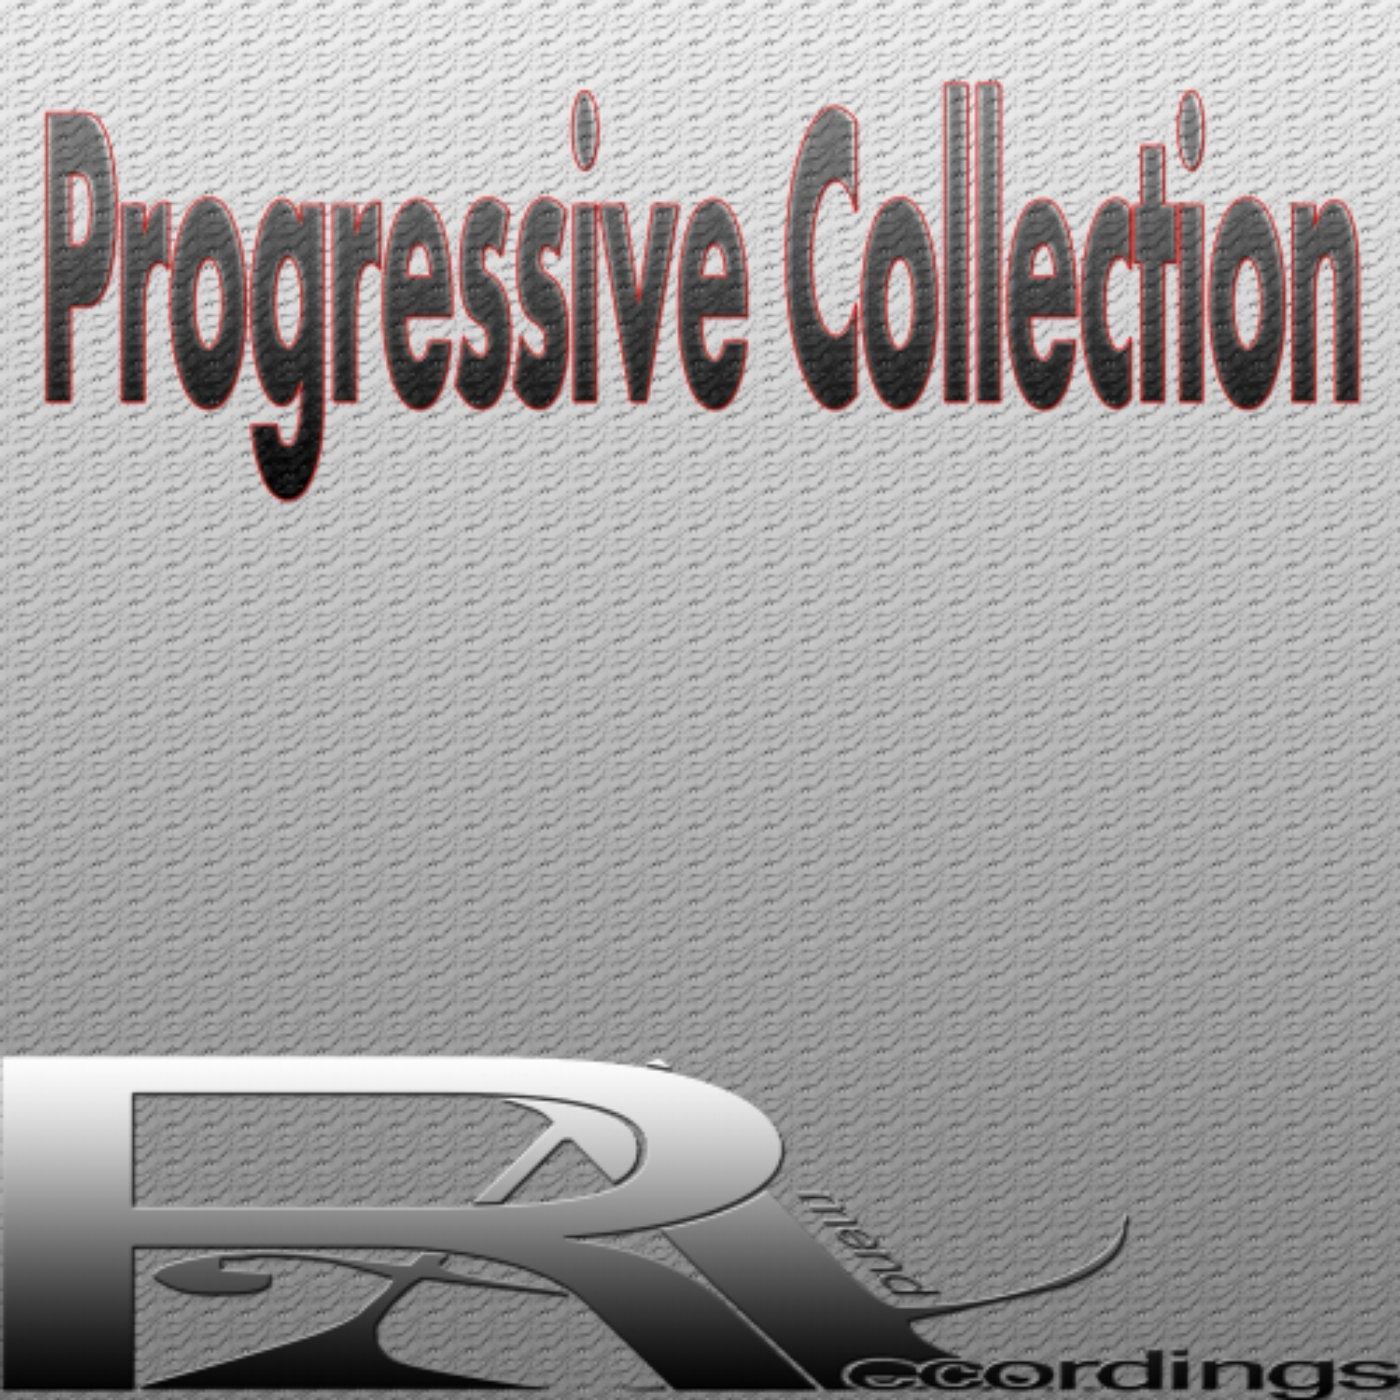 Progressive Collection